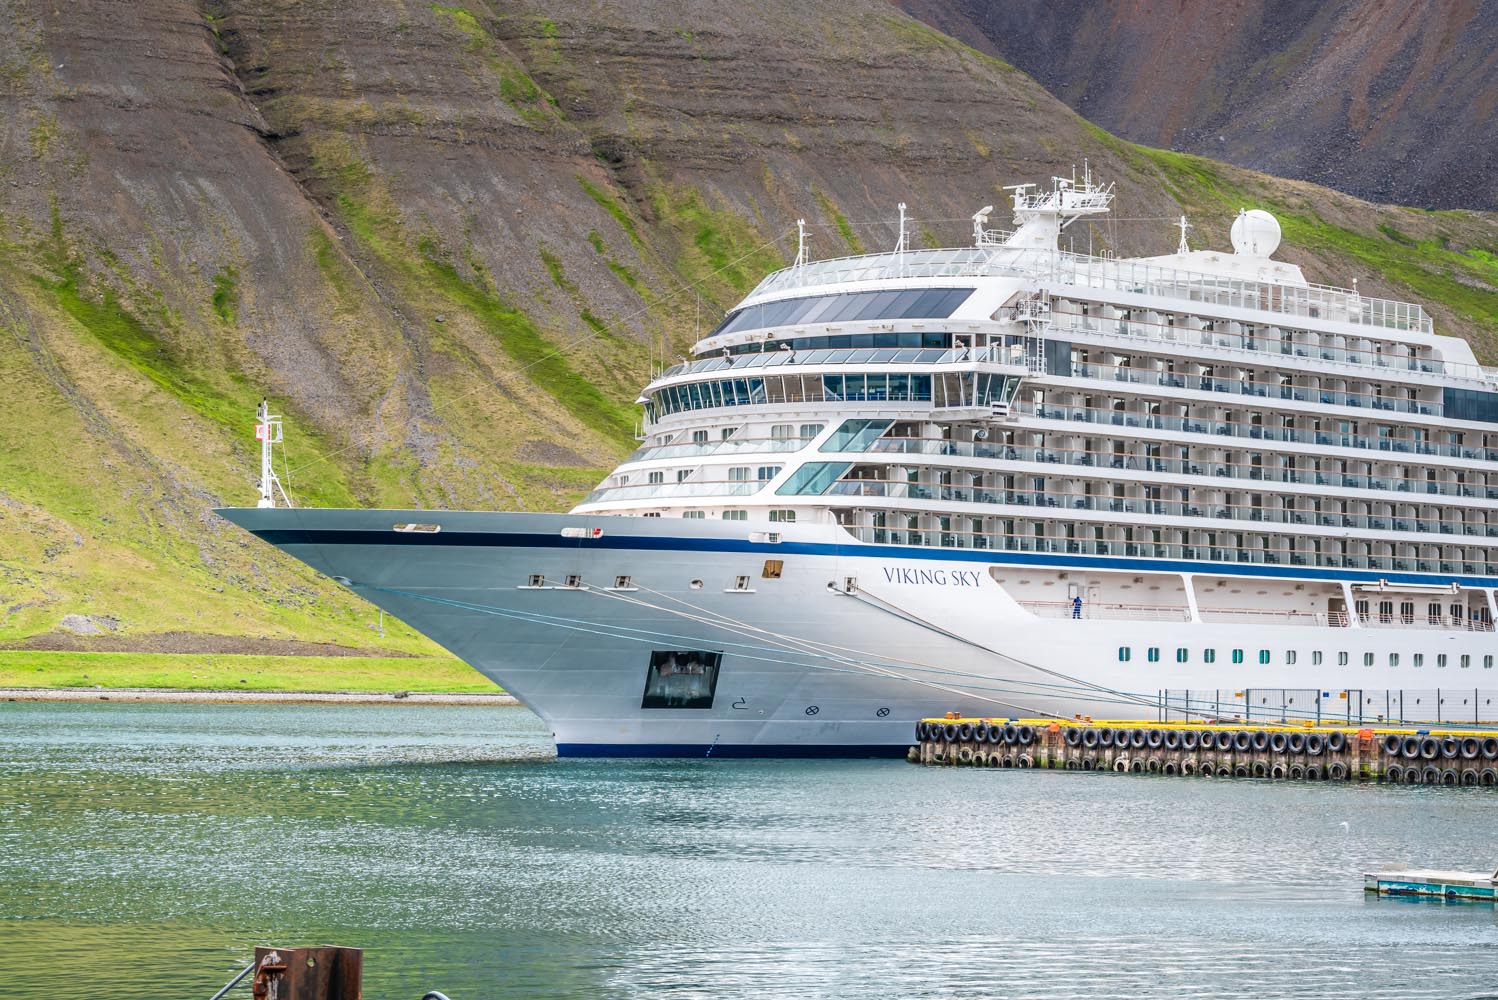 viking sky cruise ship